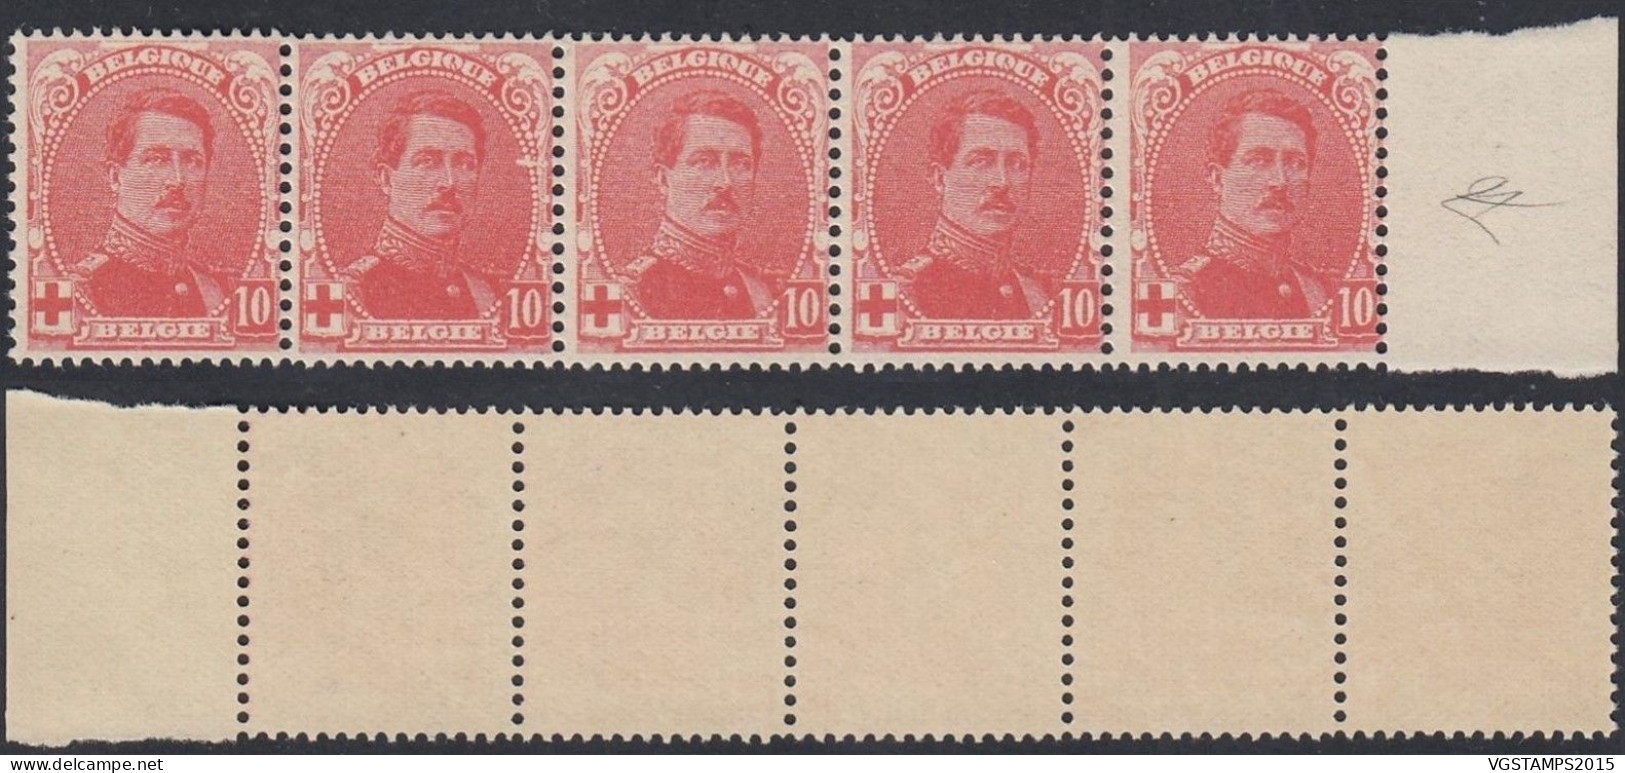 Belgique 1914 - Timbres Neufs. Nr.: 130 V. Bande De 5 Timbres................ (EB) AR-02046 - 1914-1915 Croix-Rouge